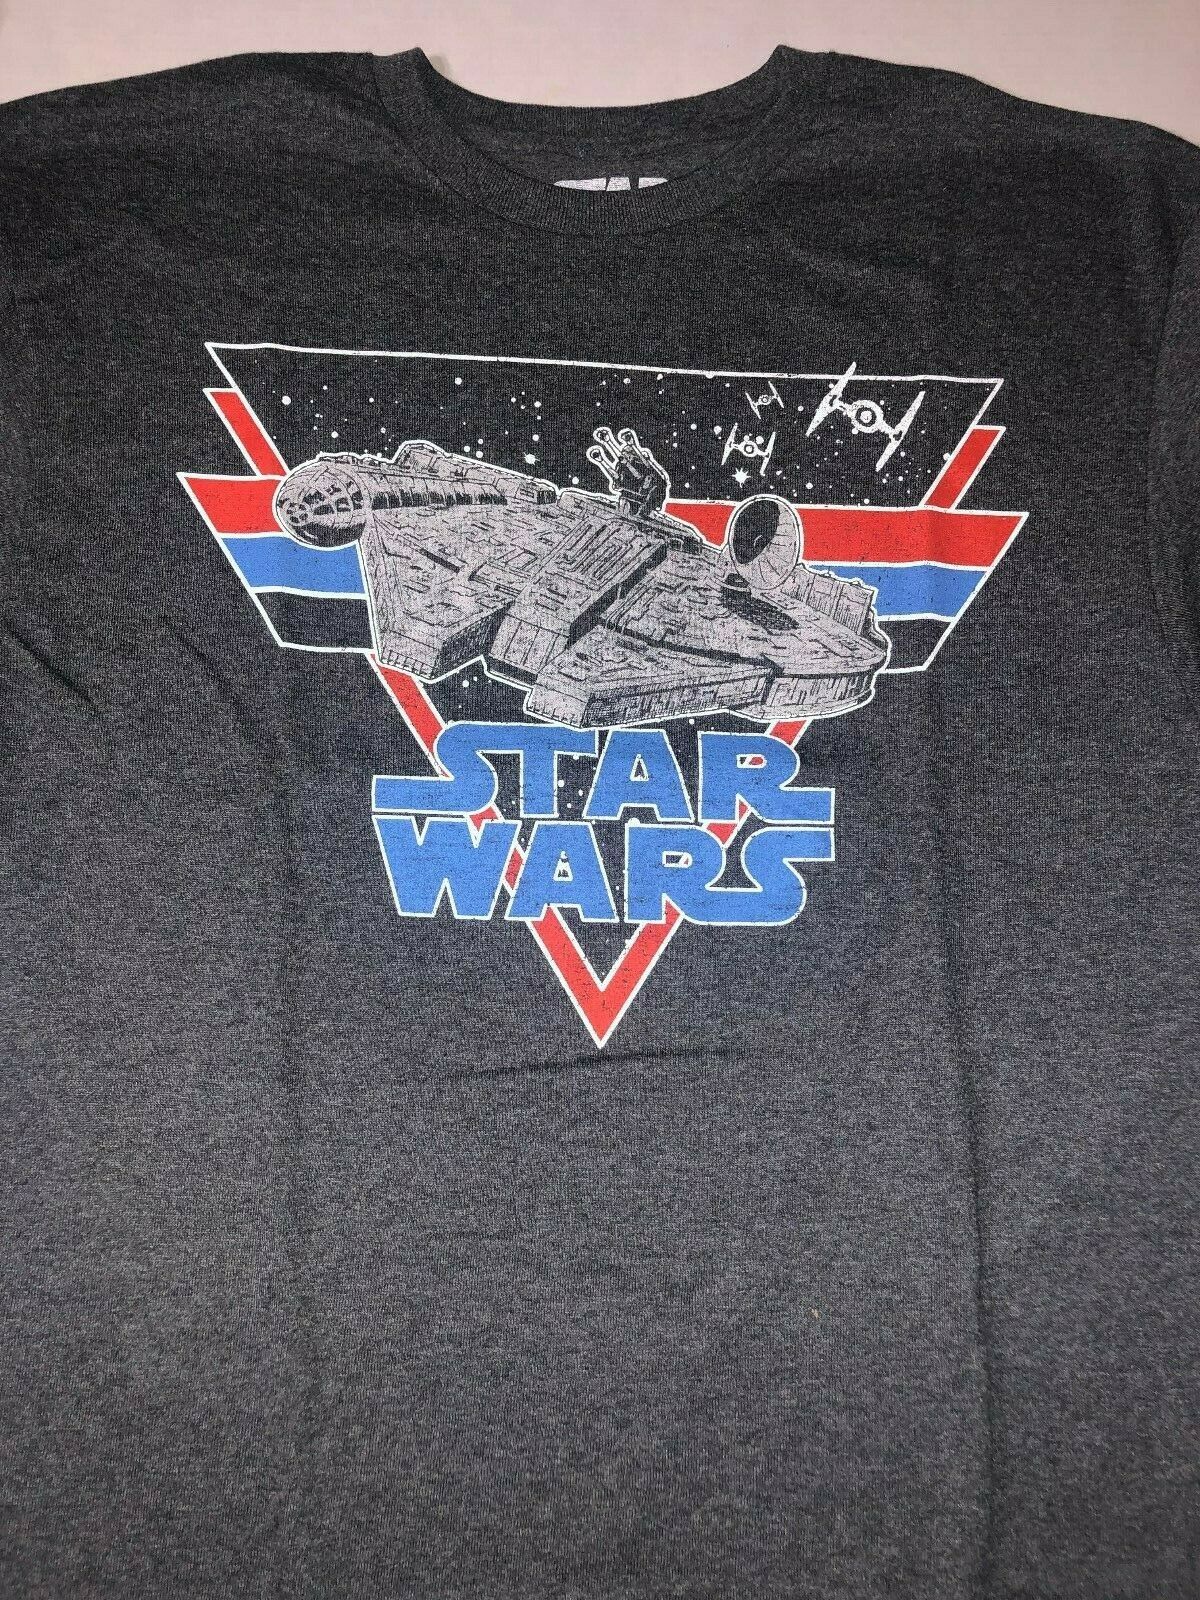 Star Wars Millennium Falcon Mens T-Shirt